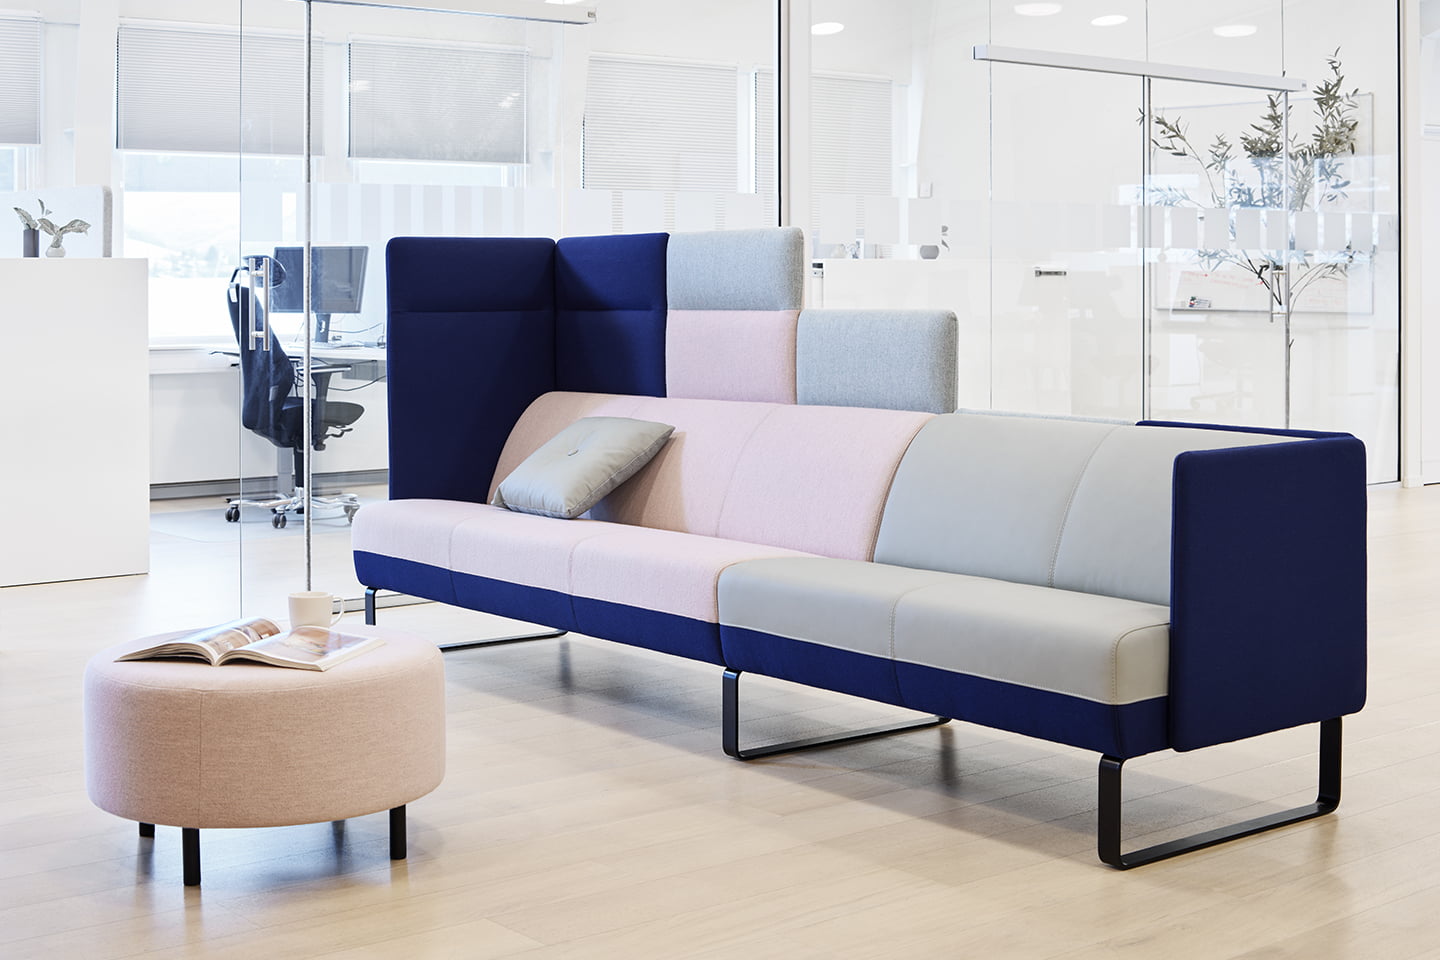 Ekornes Frende large module sofa in three different colours